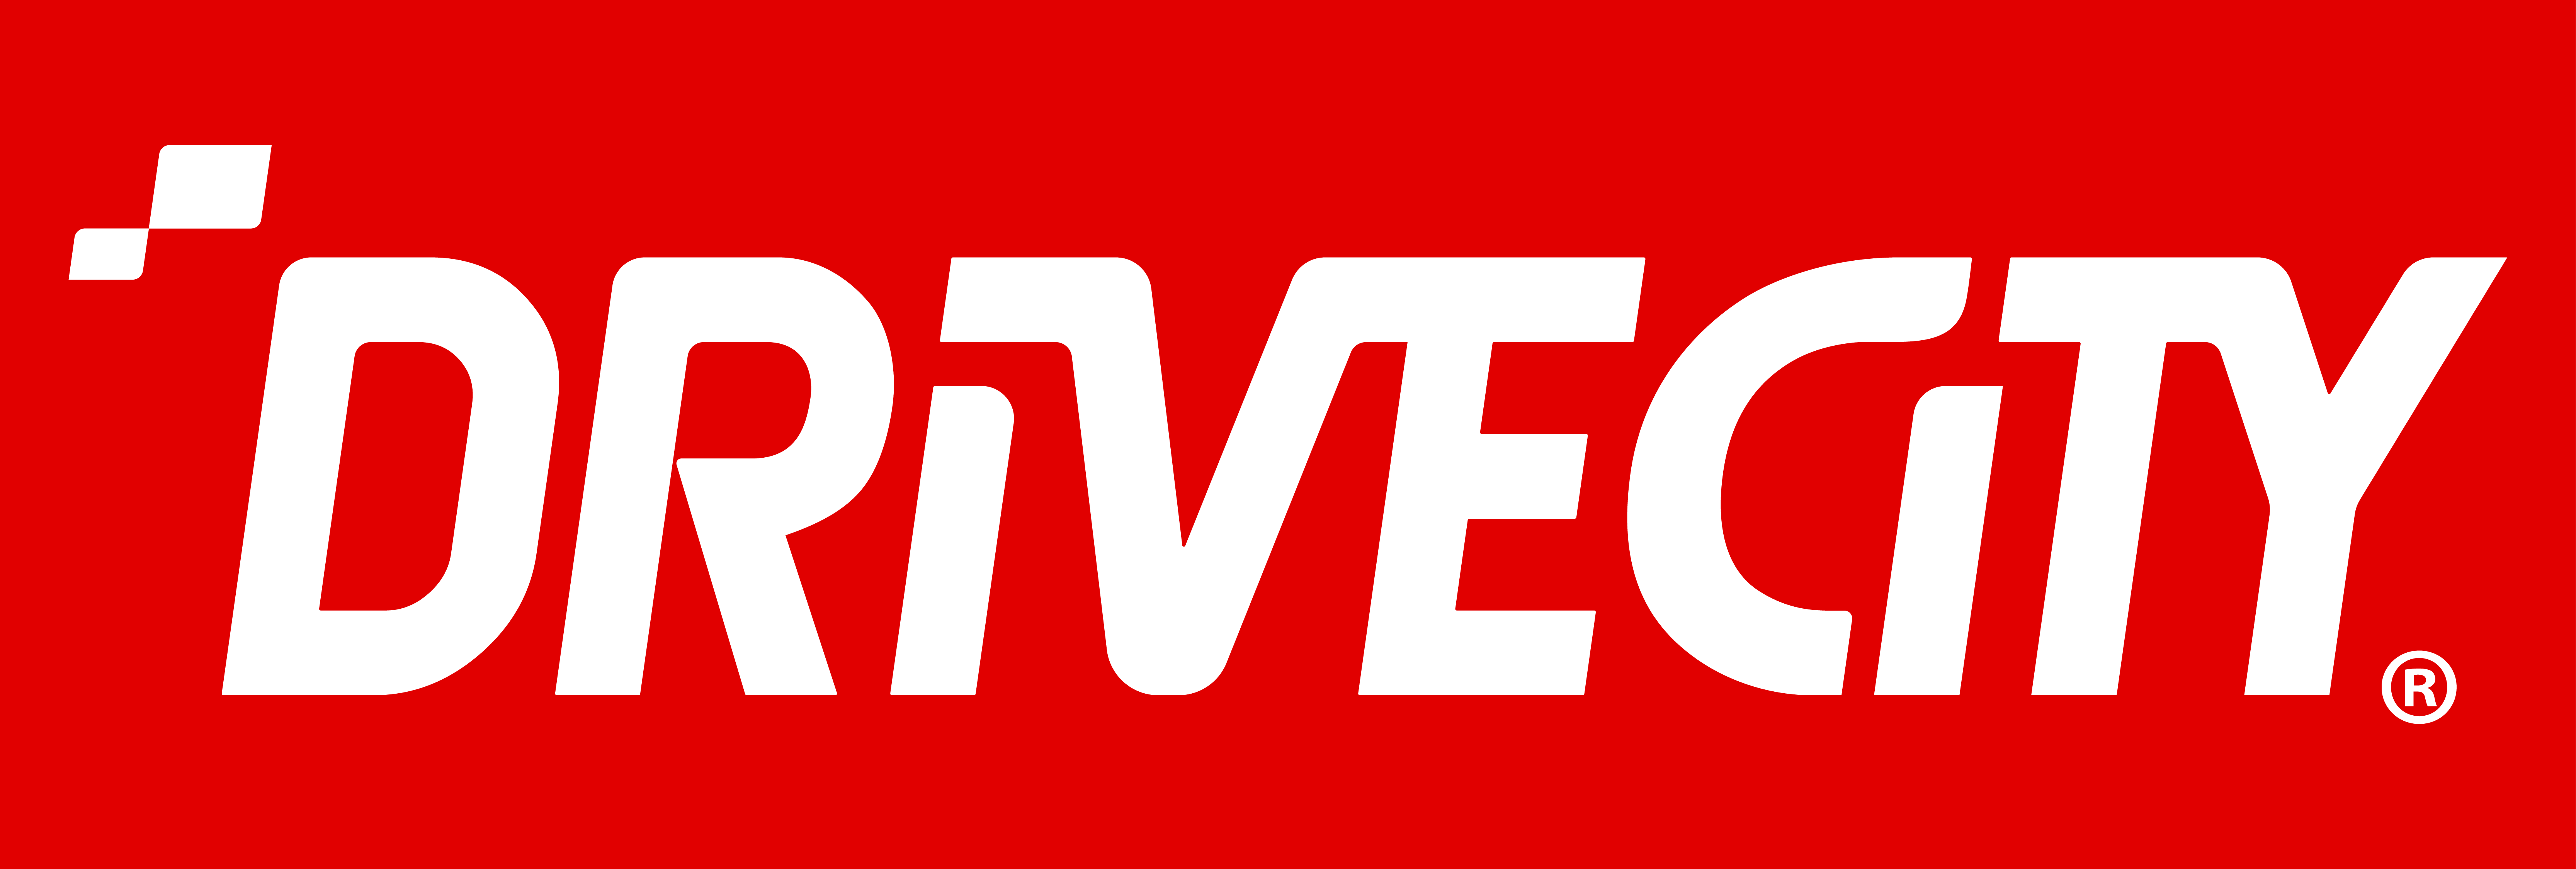 DriveCity logo